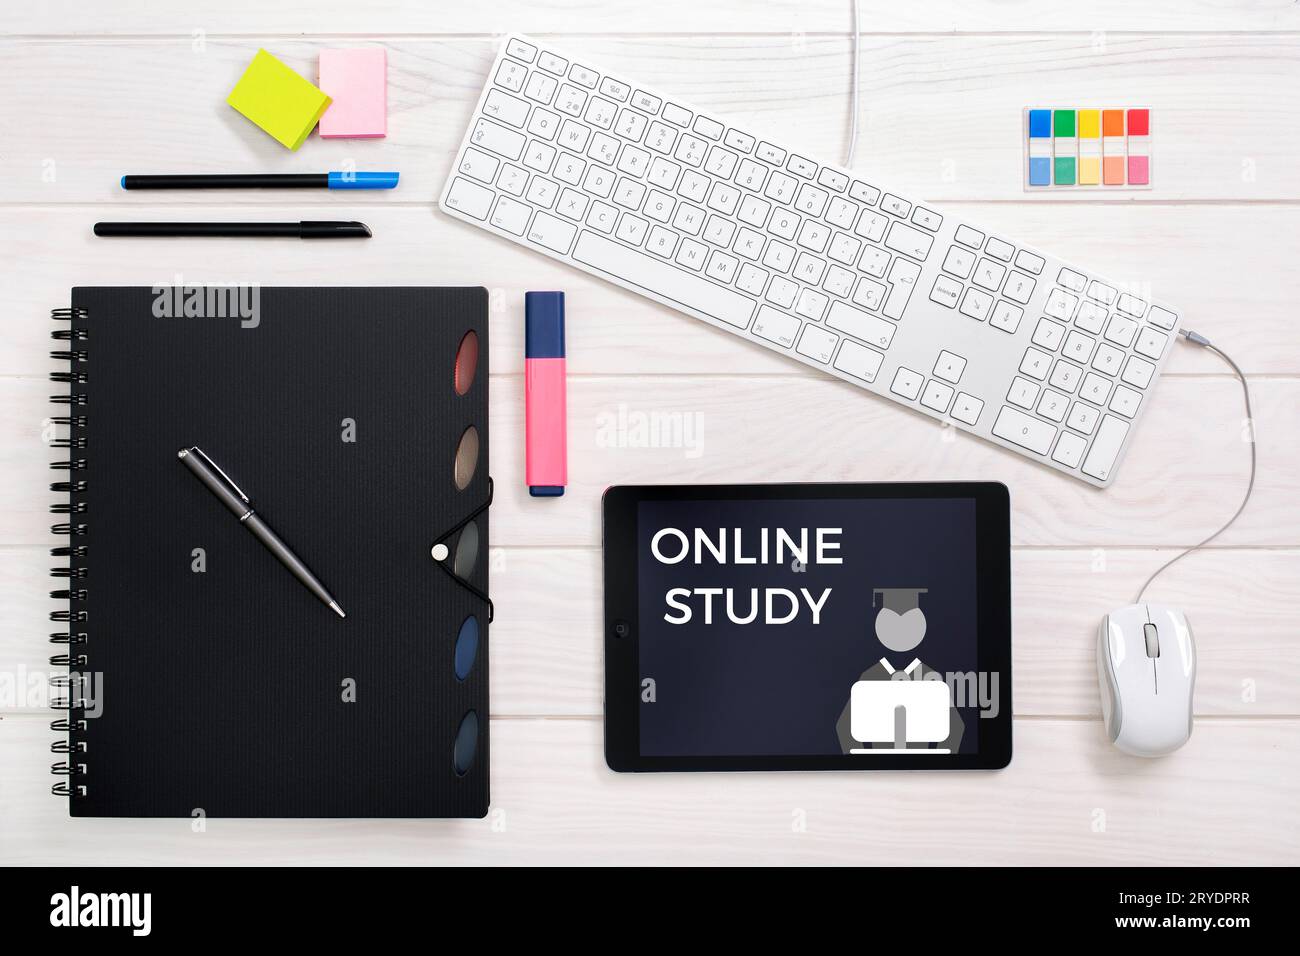 Online study concept Stock Photo